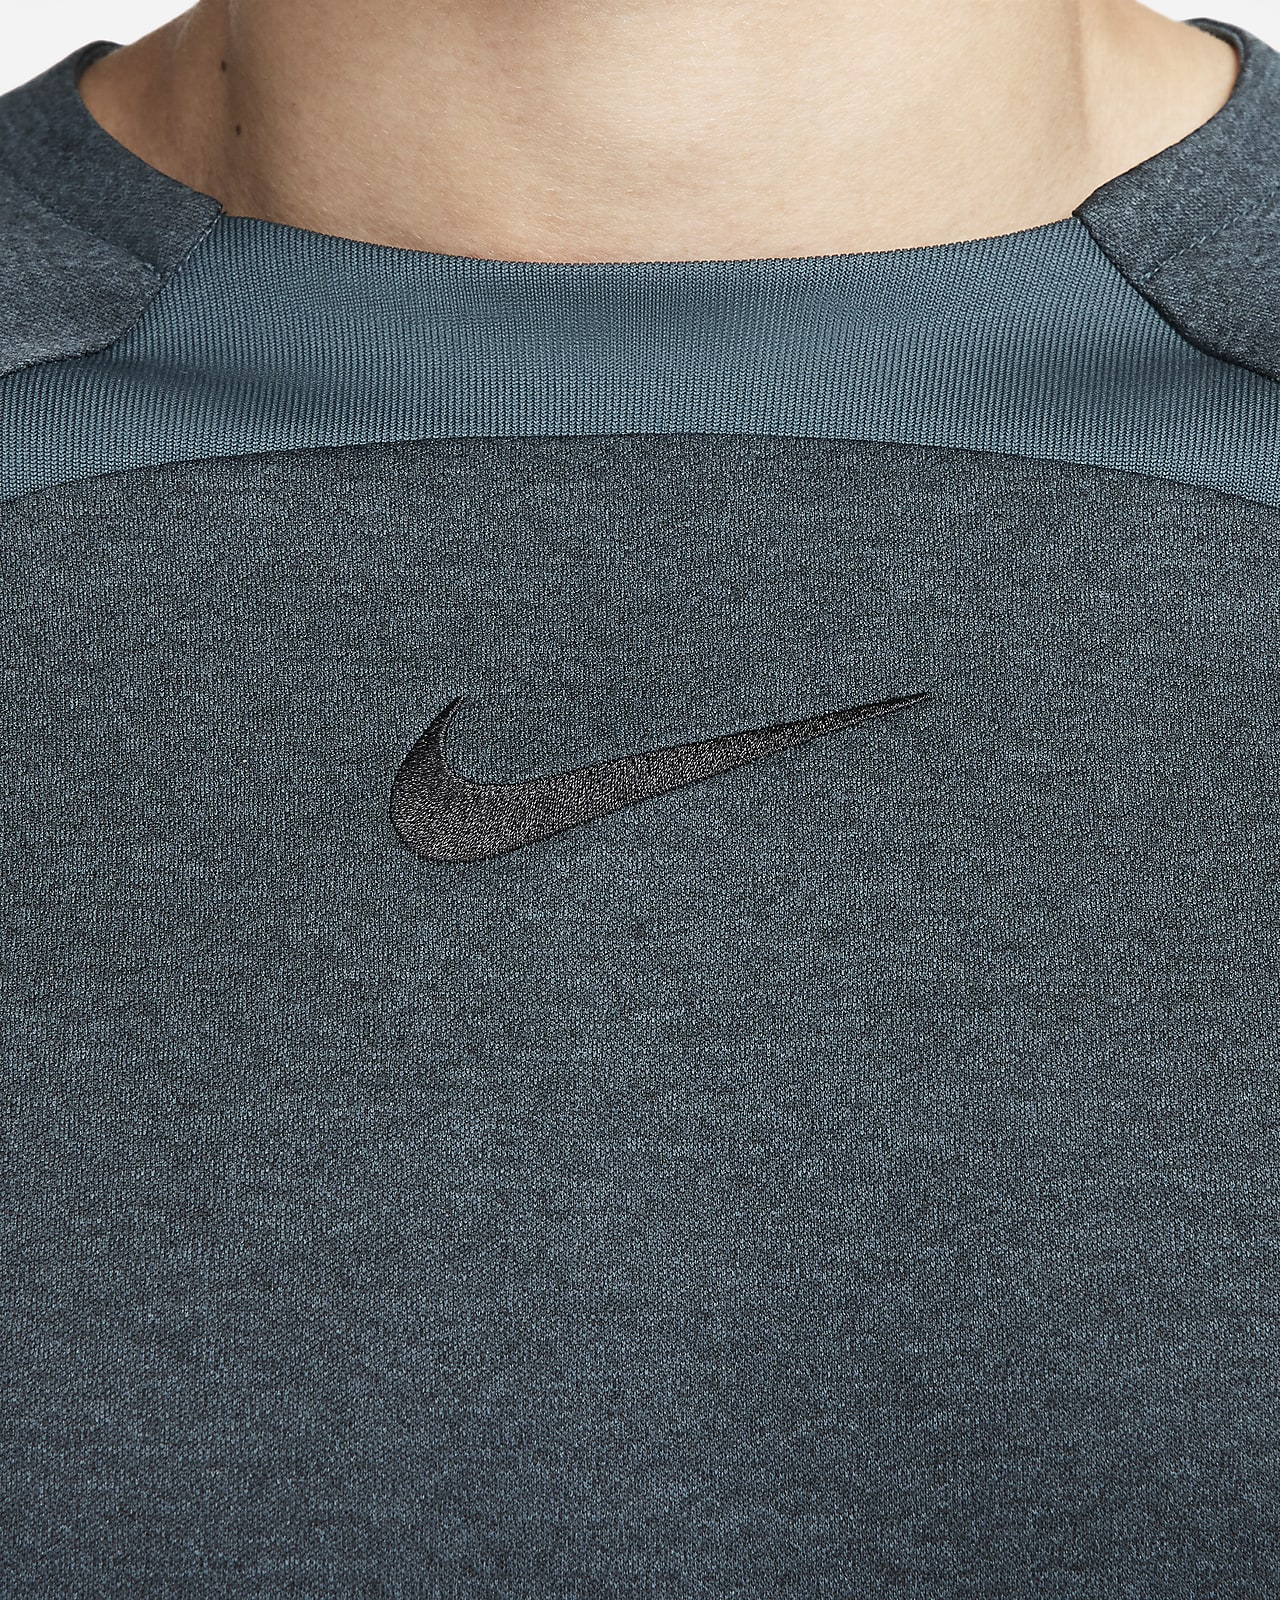 Nike Academy Men\'s Dri-FIT Short-Sleeve Soccer Top.